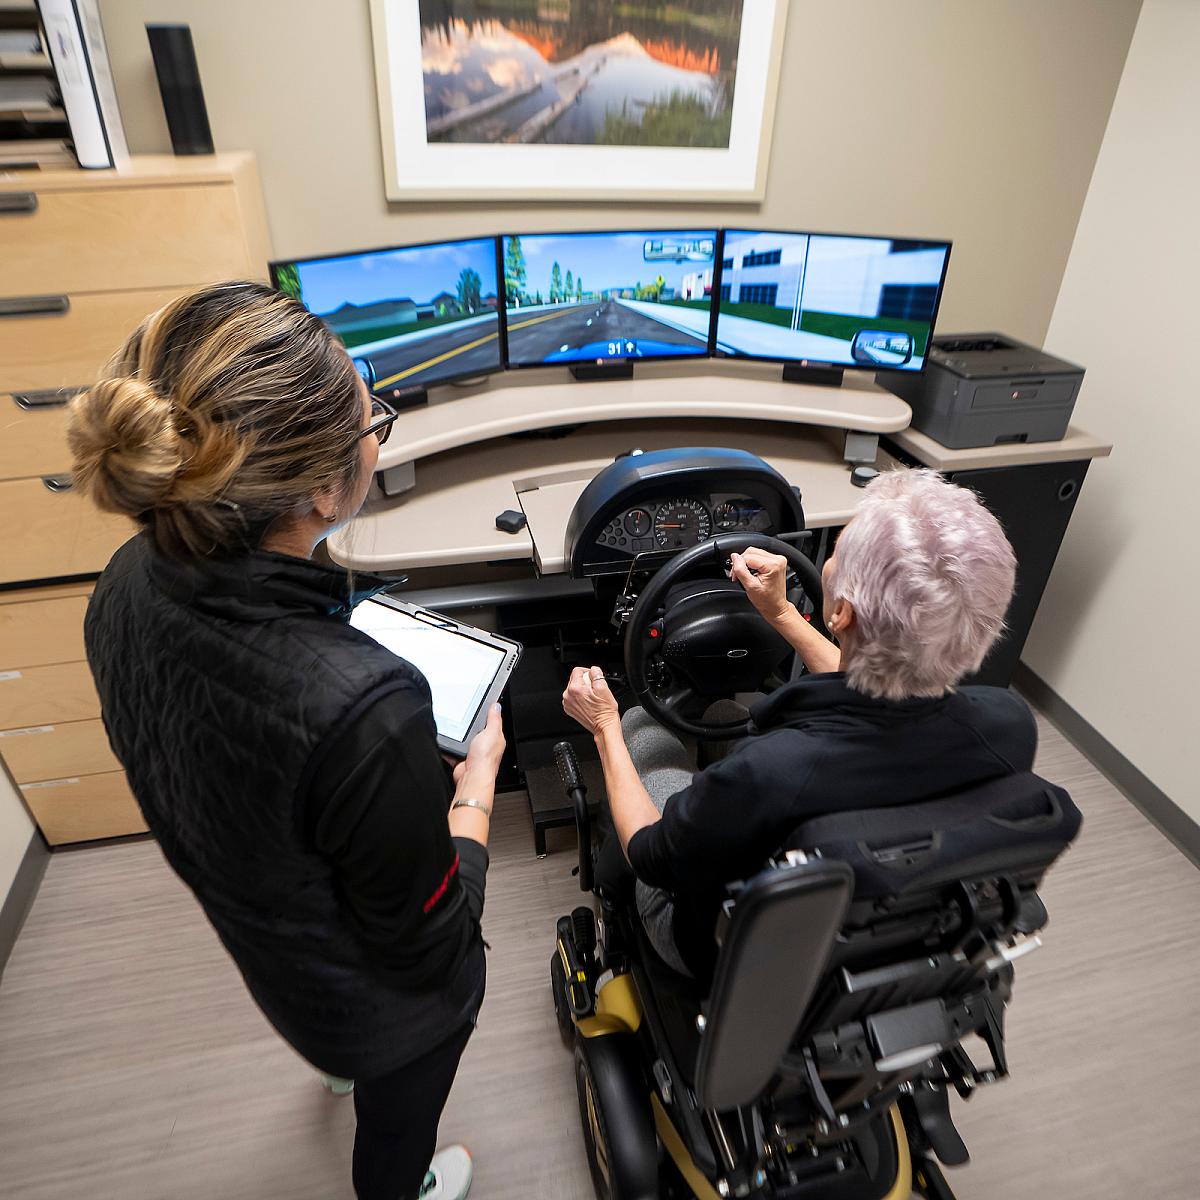 A U of U Health employee helps a woman use driving simulator at Sugar House Health Center